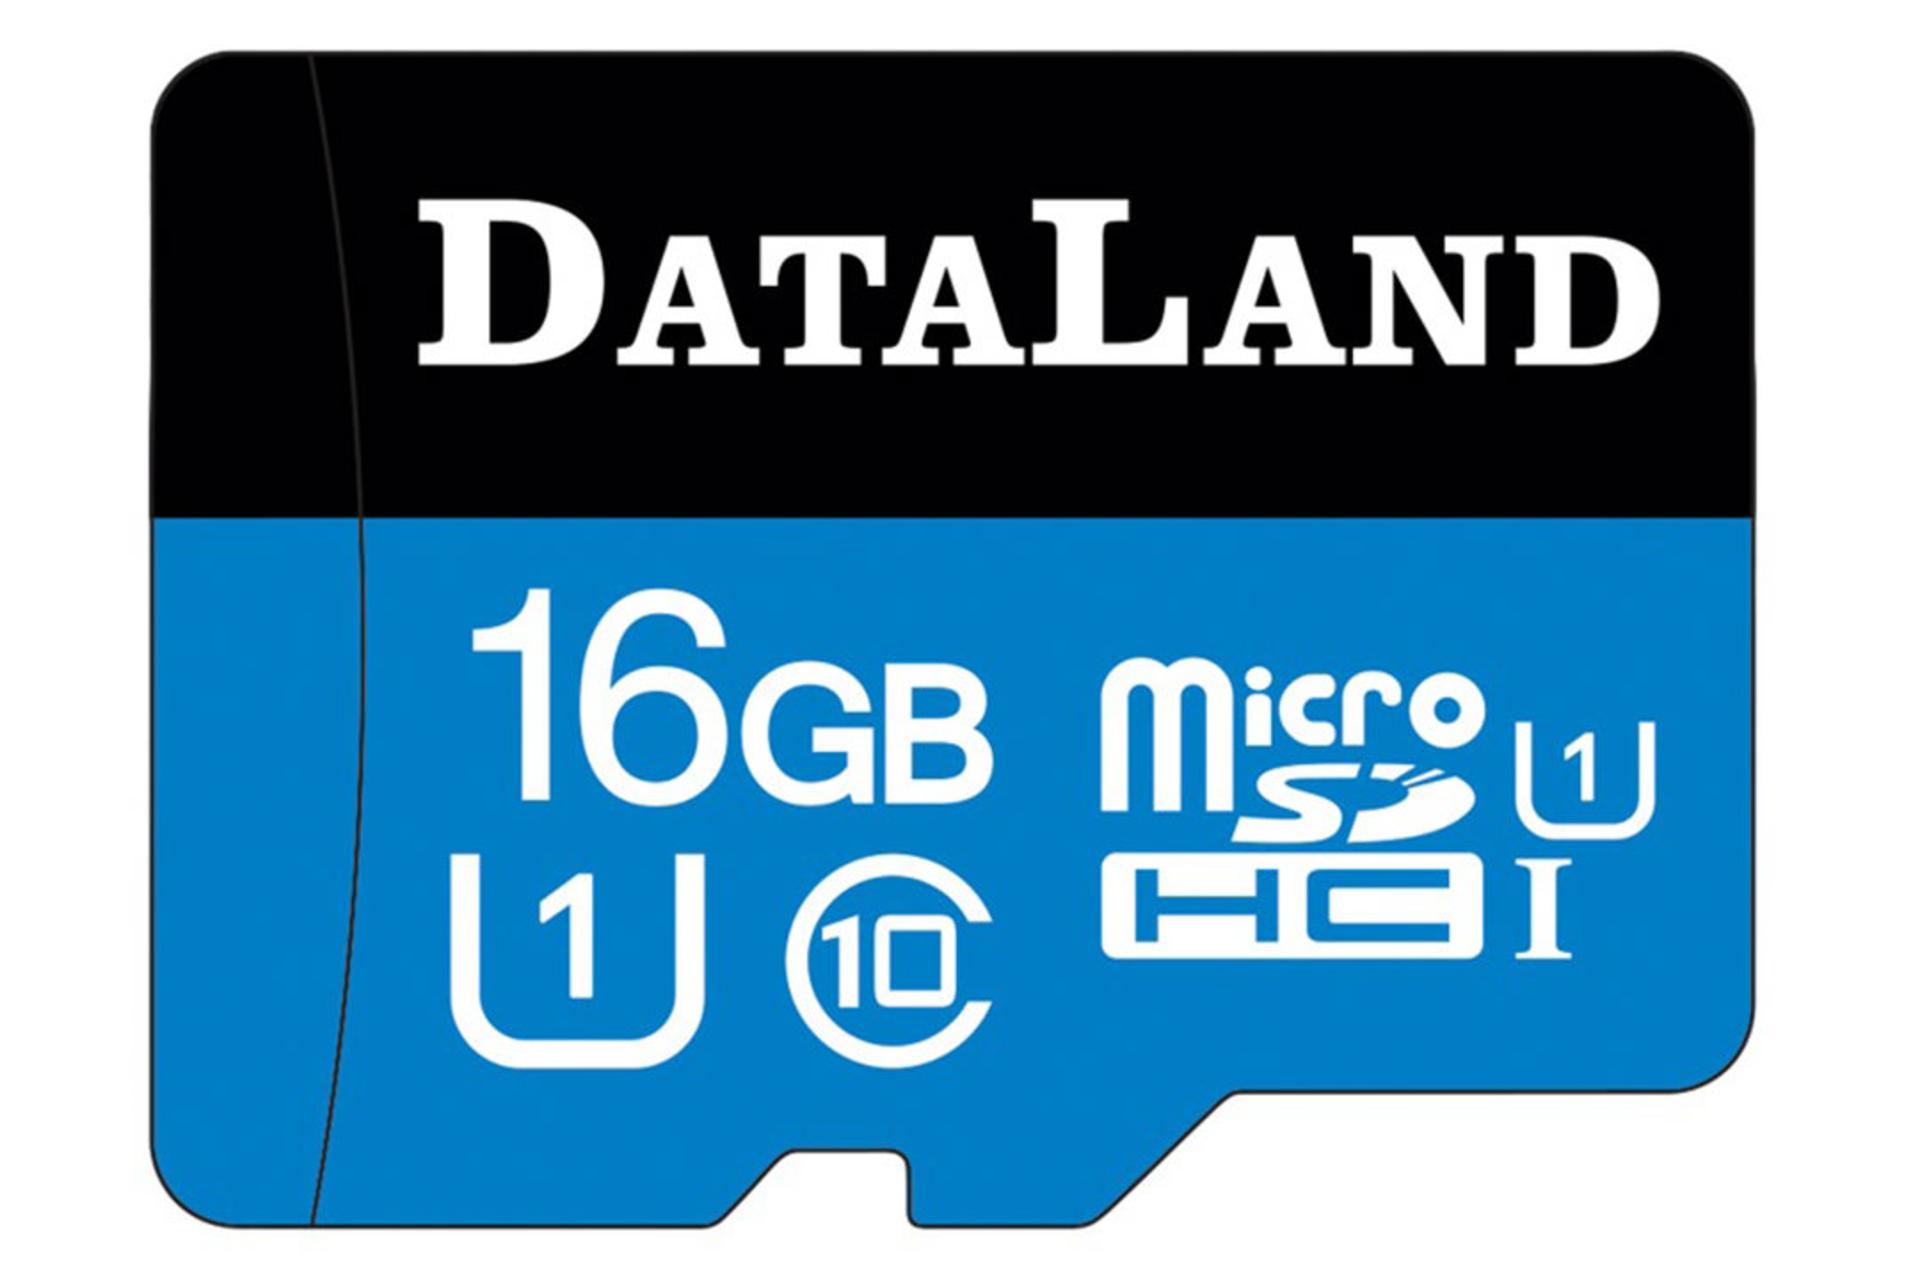 DataLand 533x microSDHC Class 10 UHS-I U1 16GB